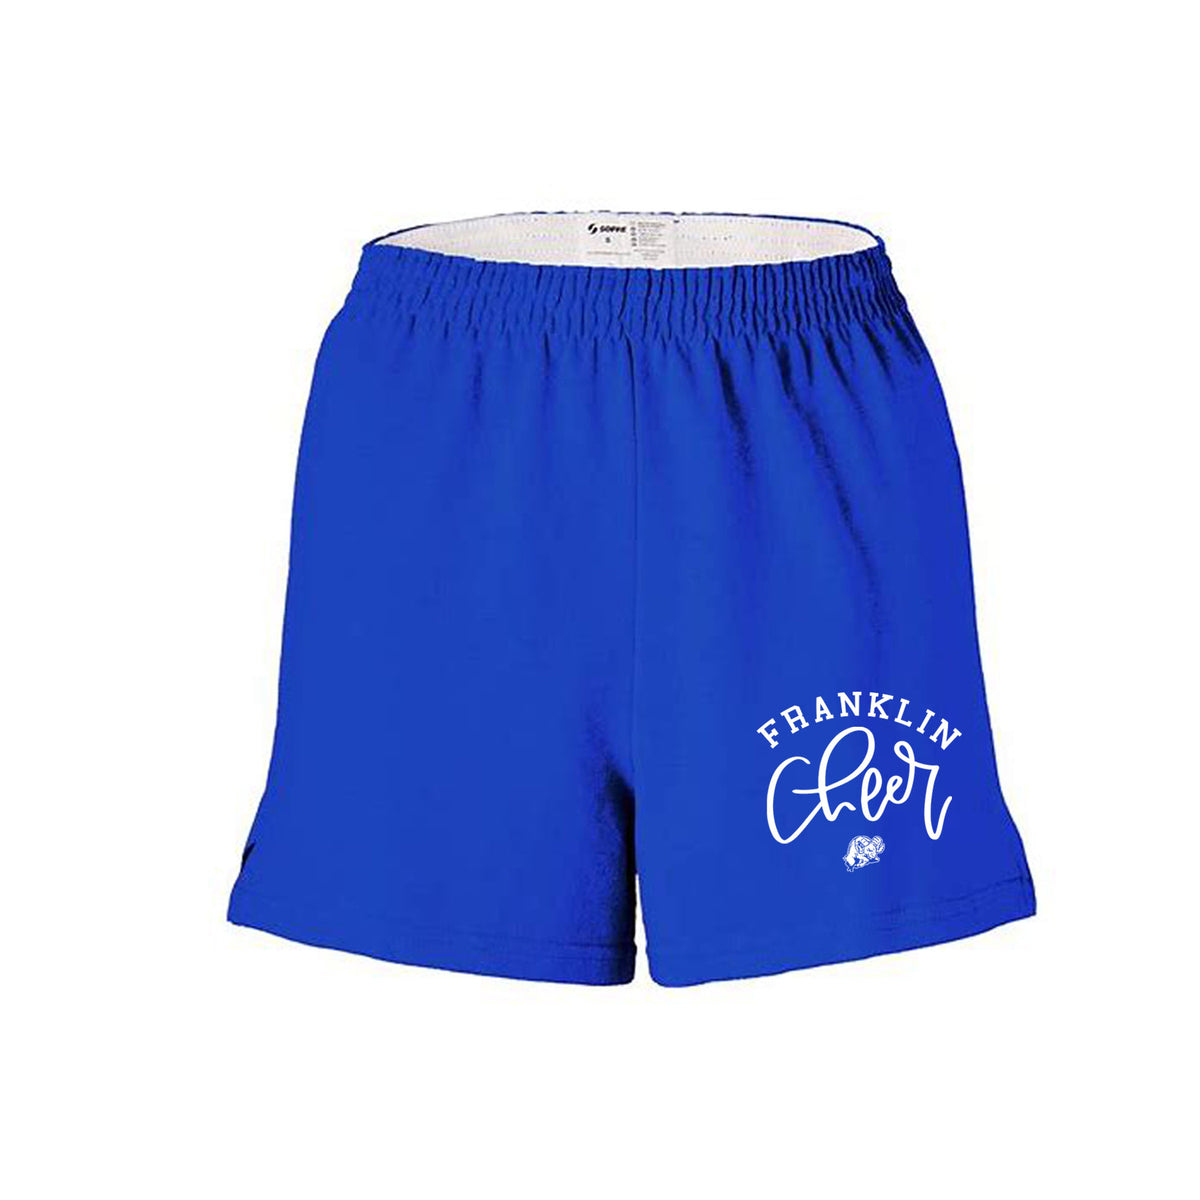 Franklin Cheer girls Shorts Design 3